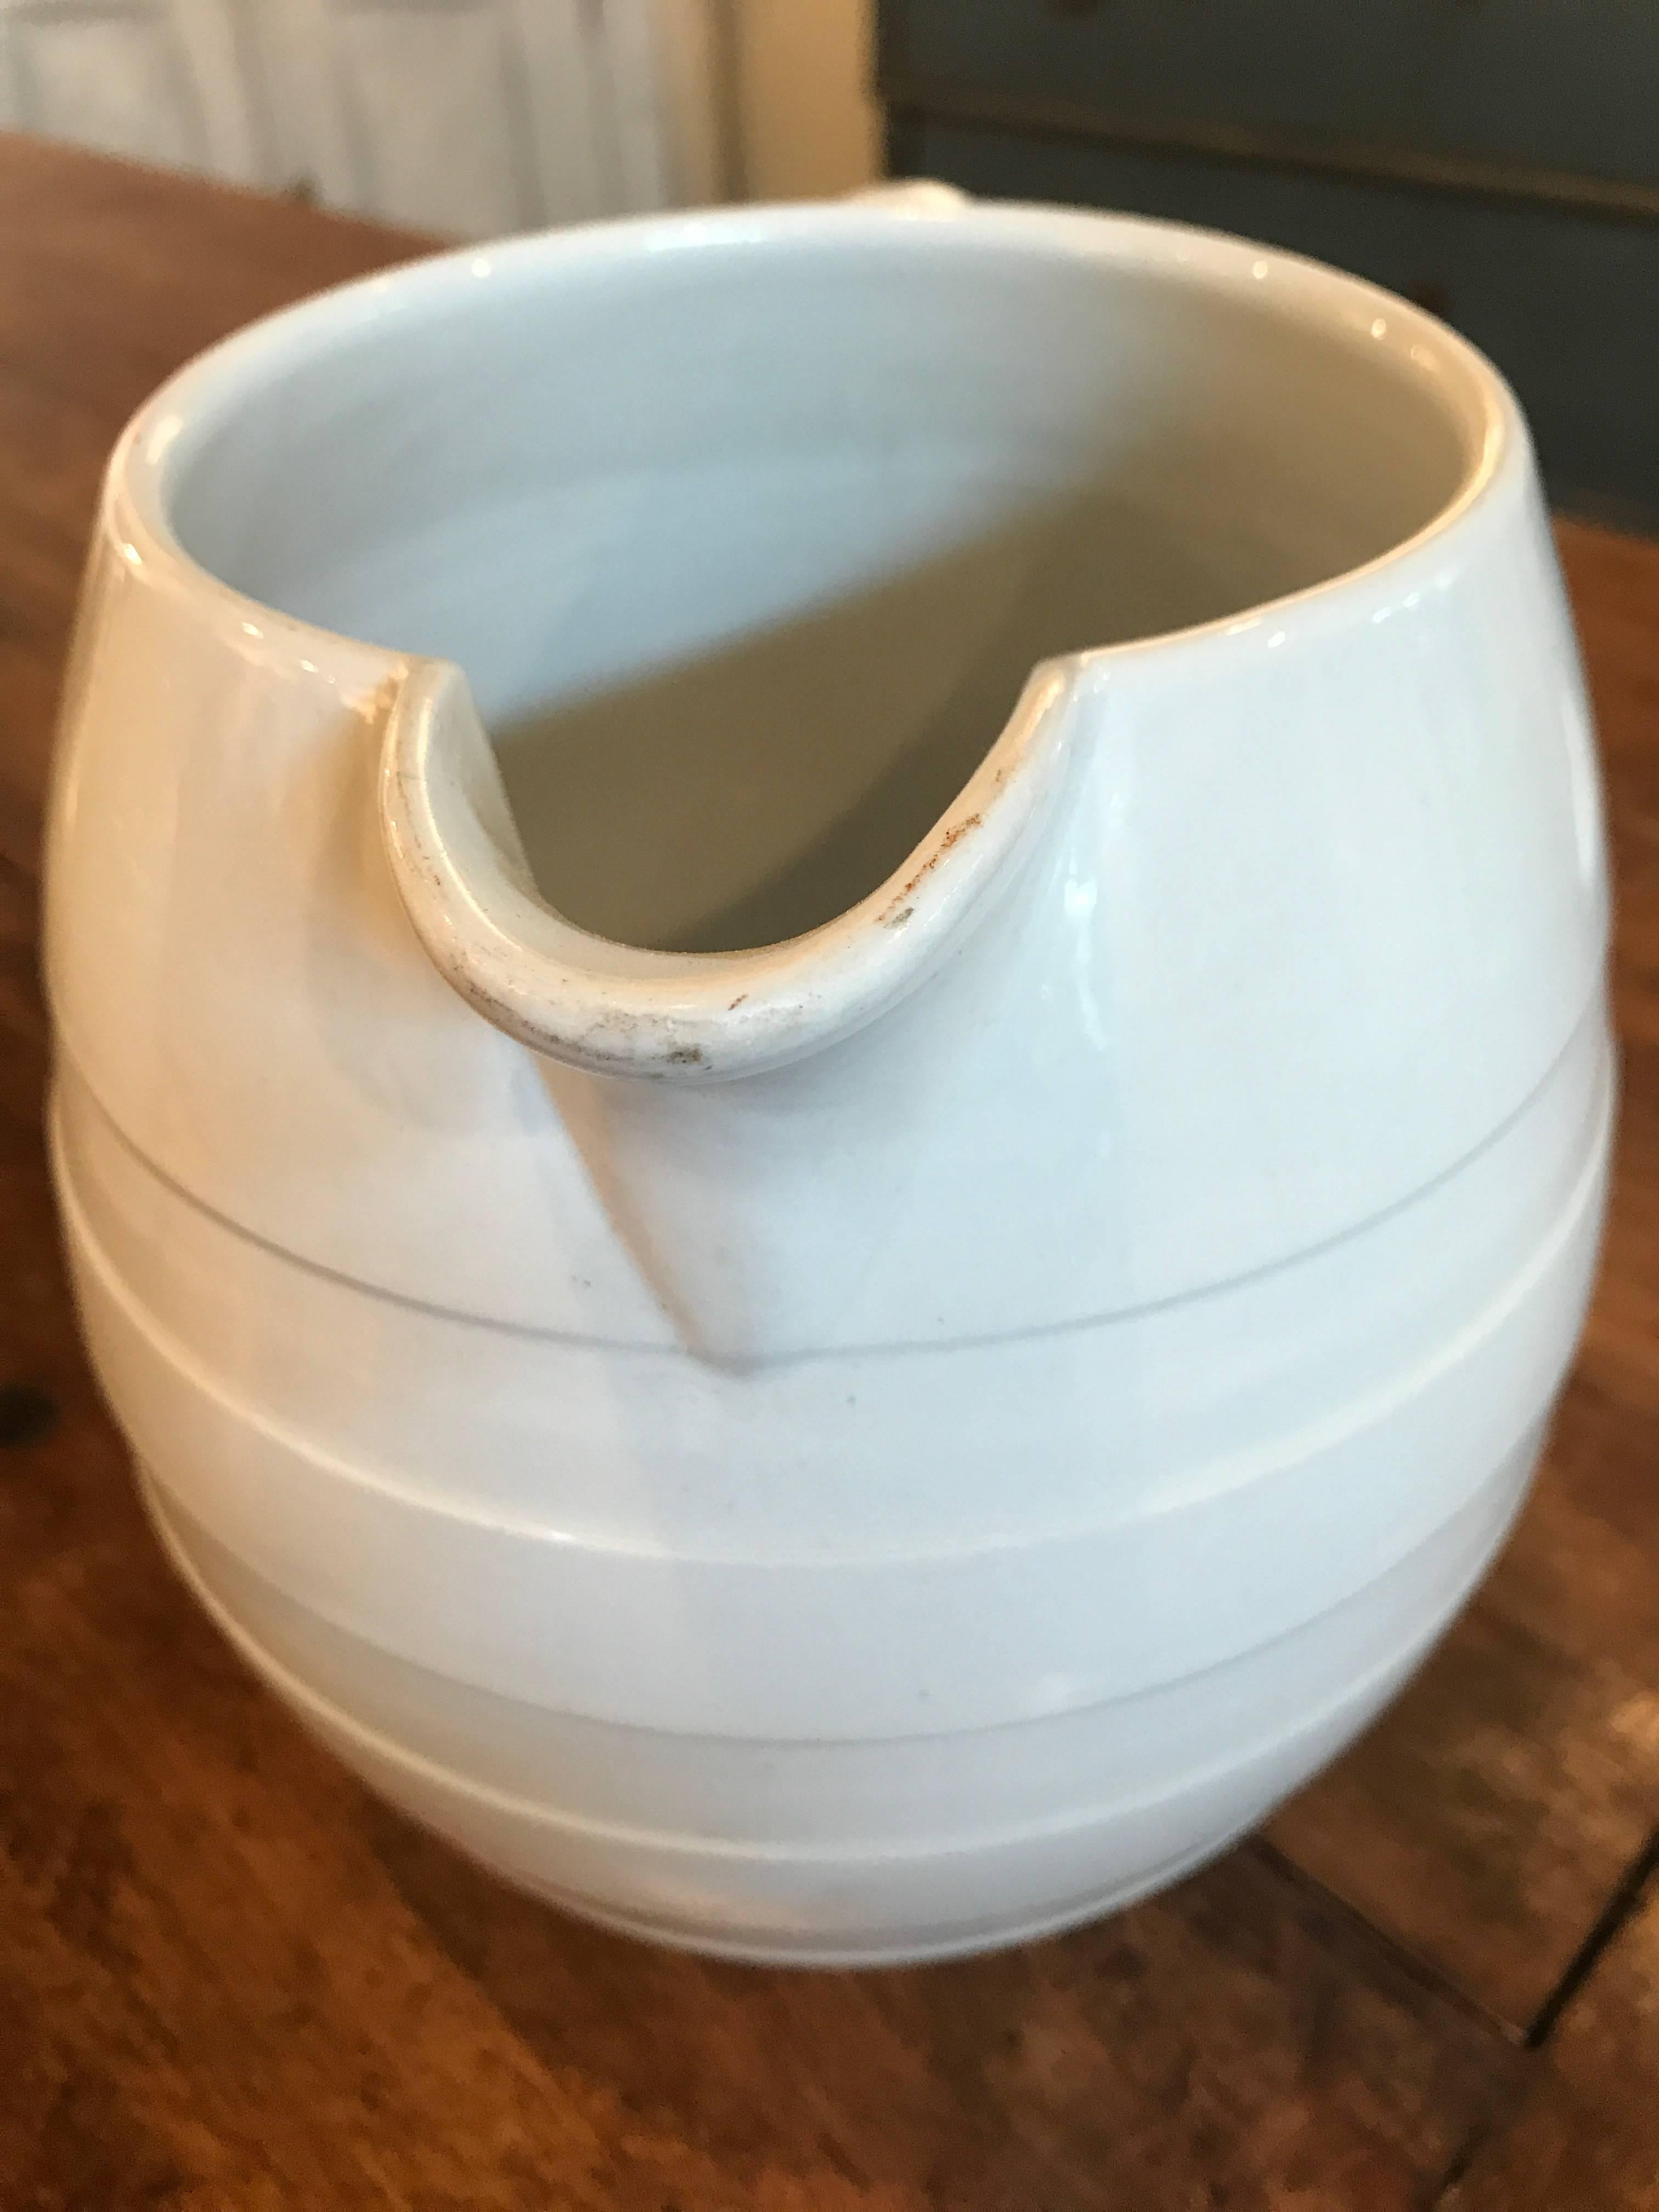 Mid-20th century ironstone jug with banding.